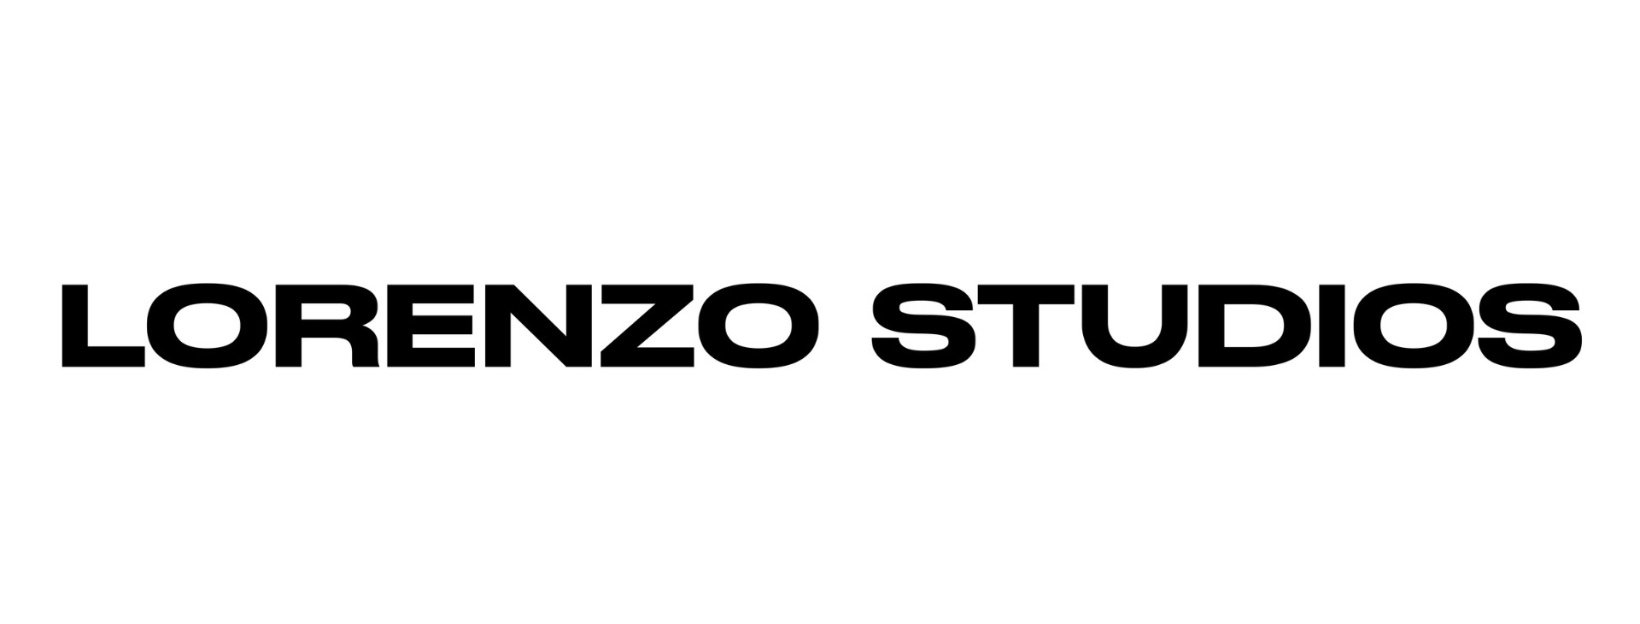 Lorenzo Studios logo